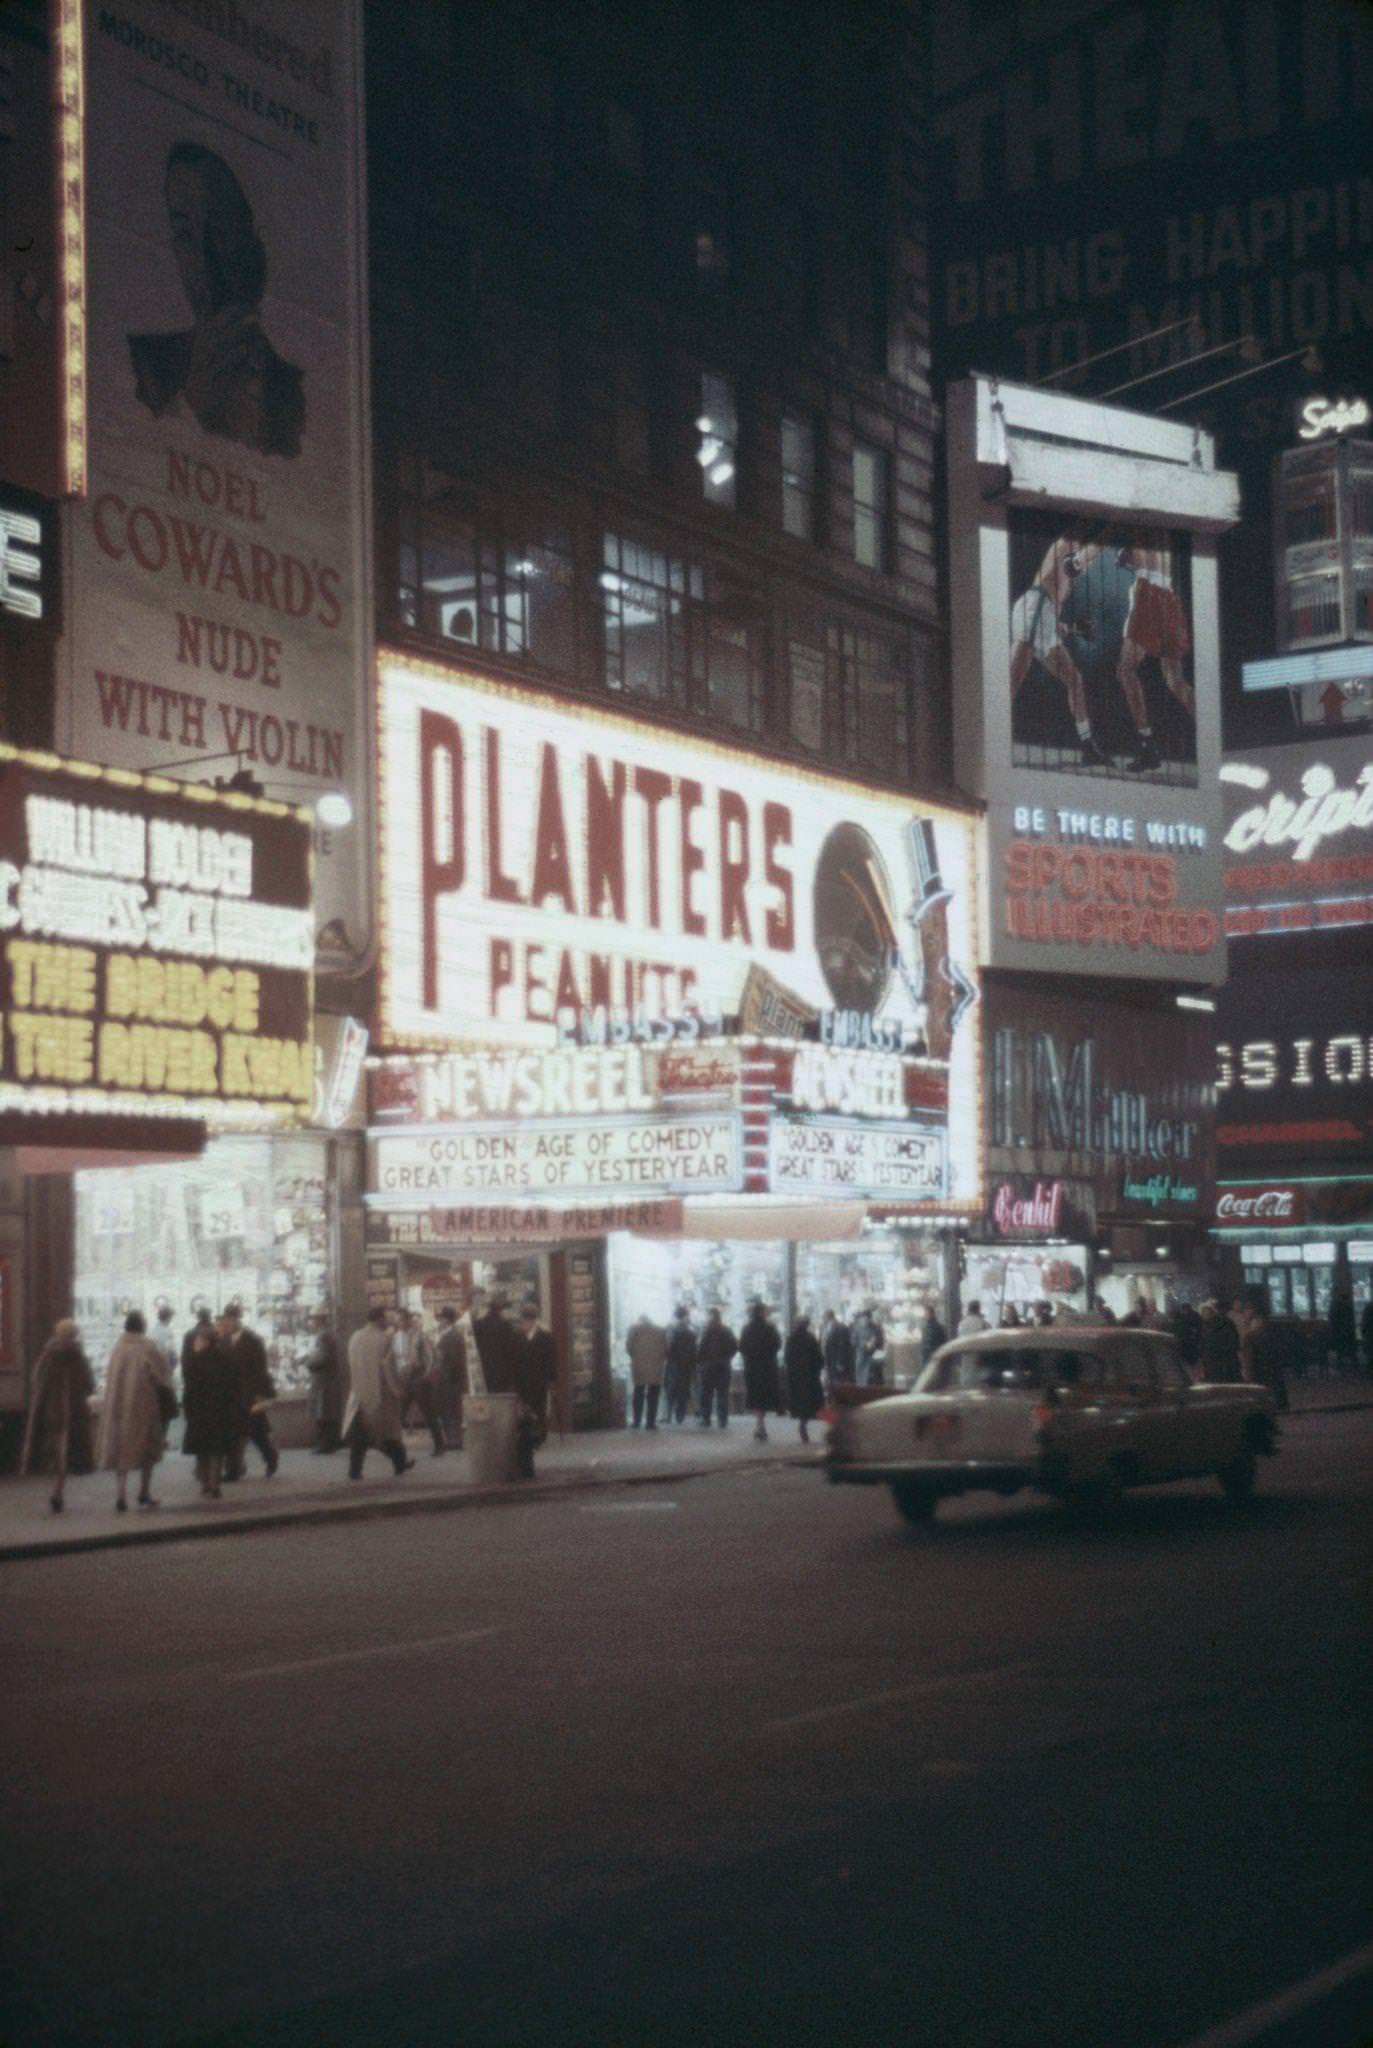 Various Advertisements And Planters Peanuts Illuminated At Times Square, Manhattan, 1957.